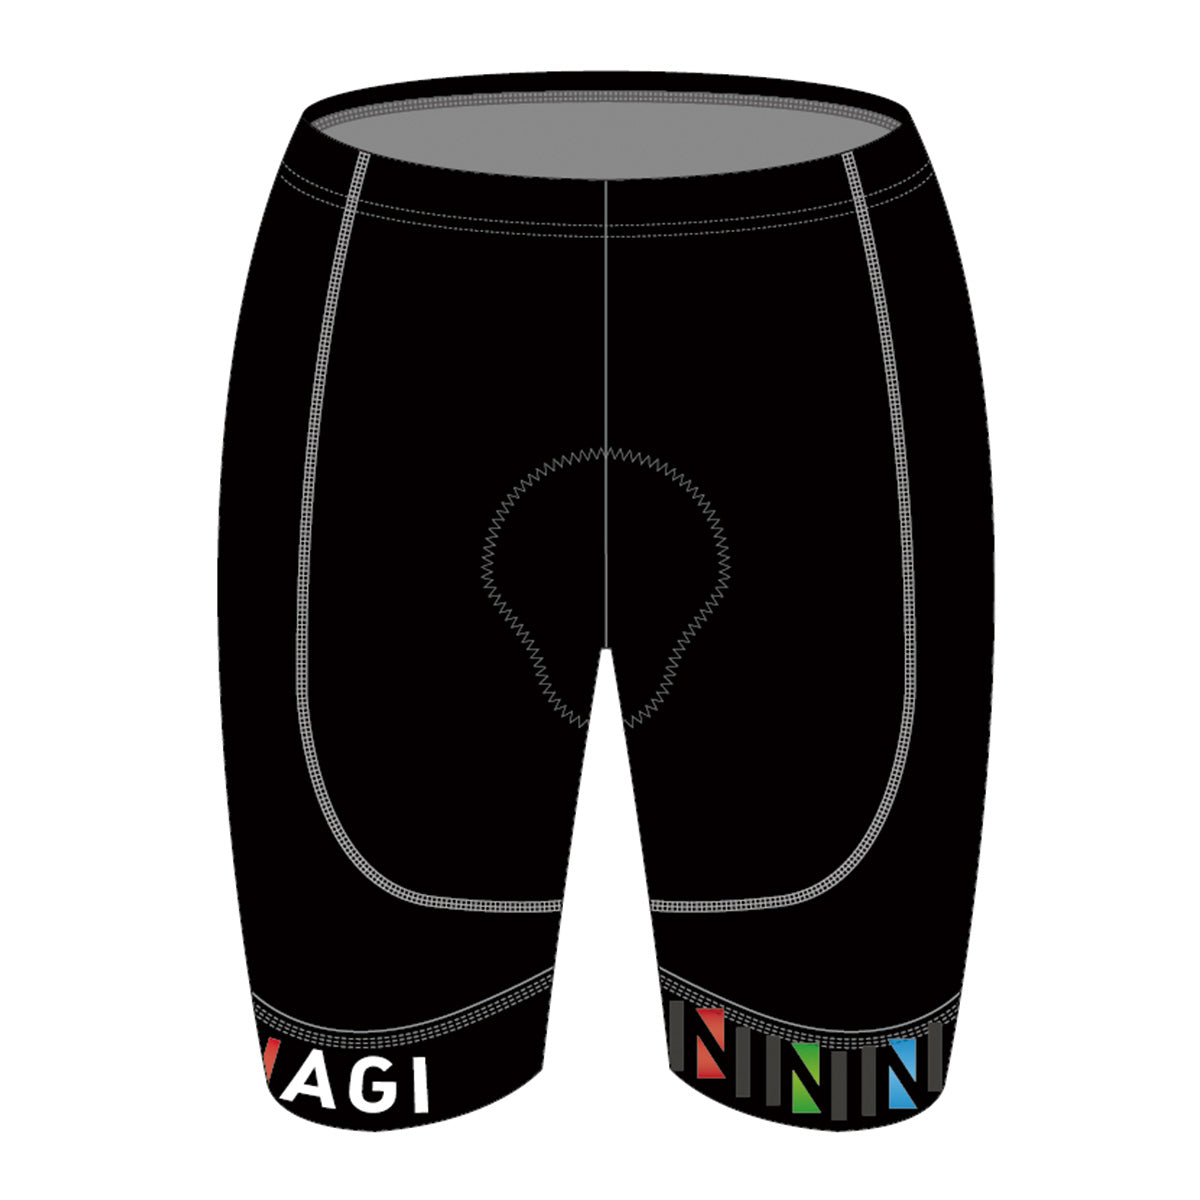 Team Nagi BLACK BRONZE Cycling Shorts